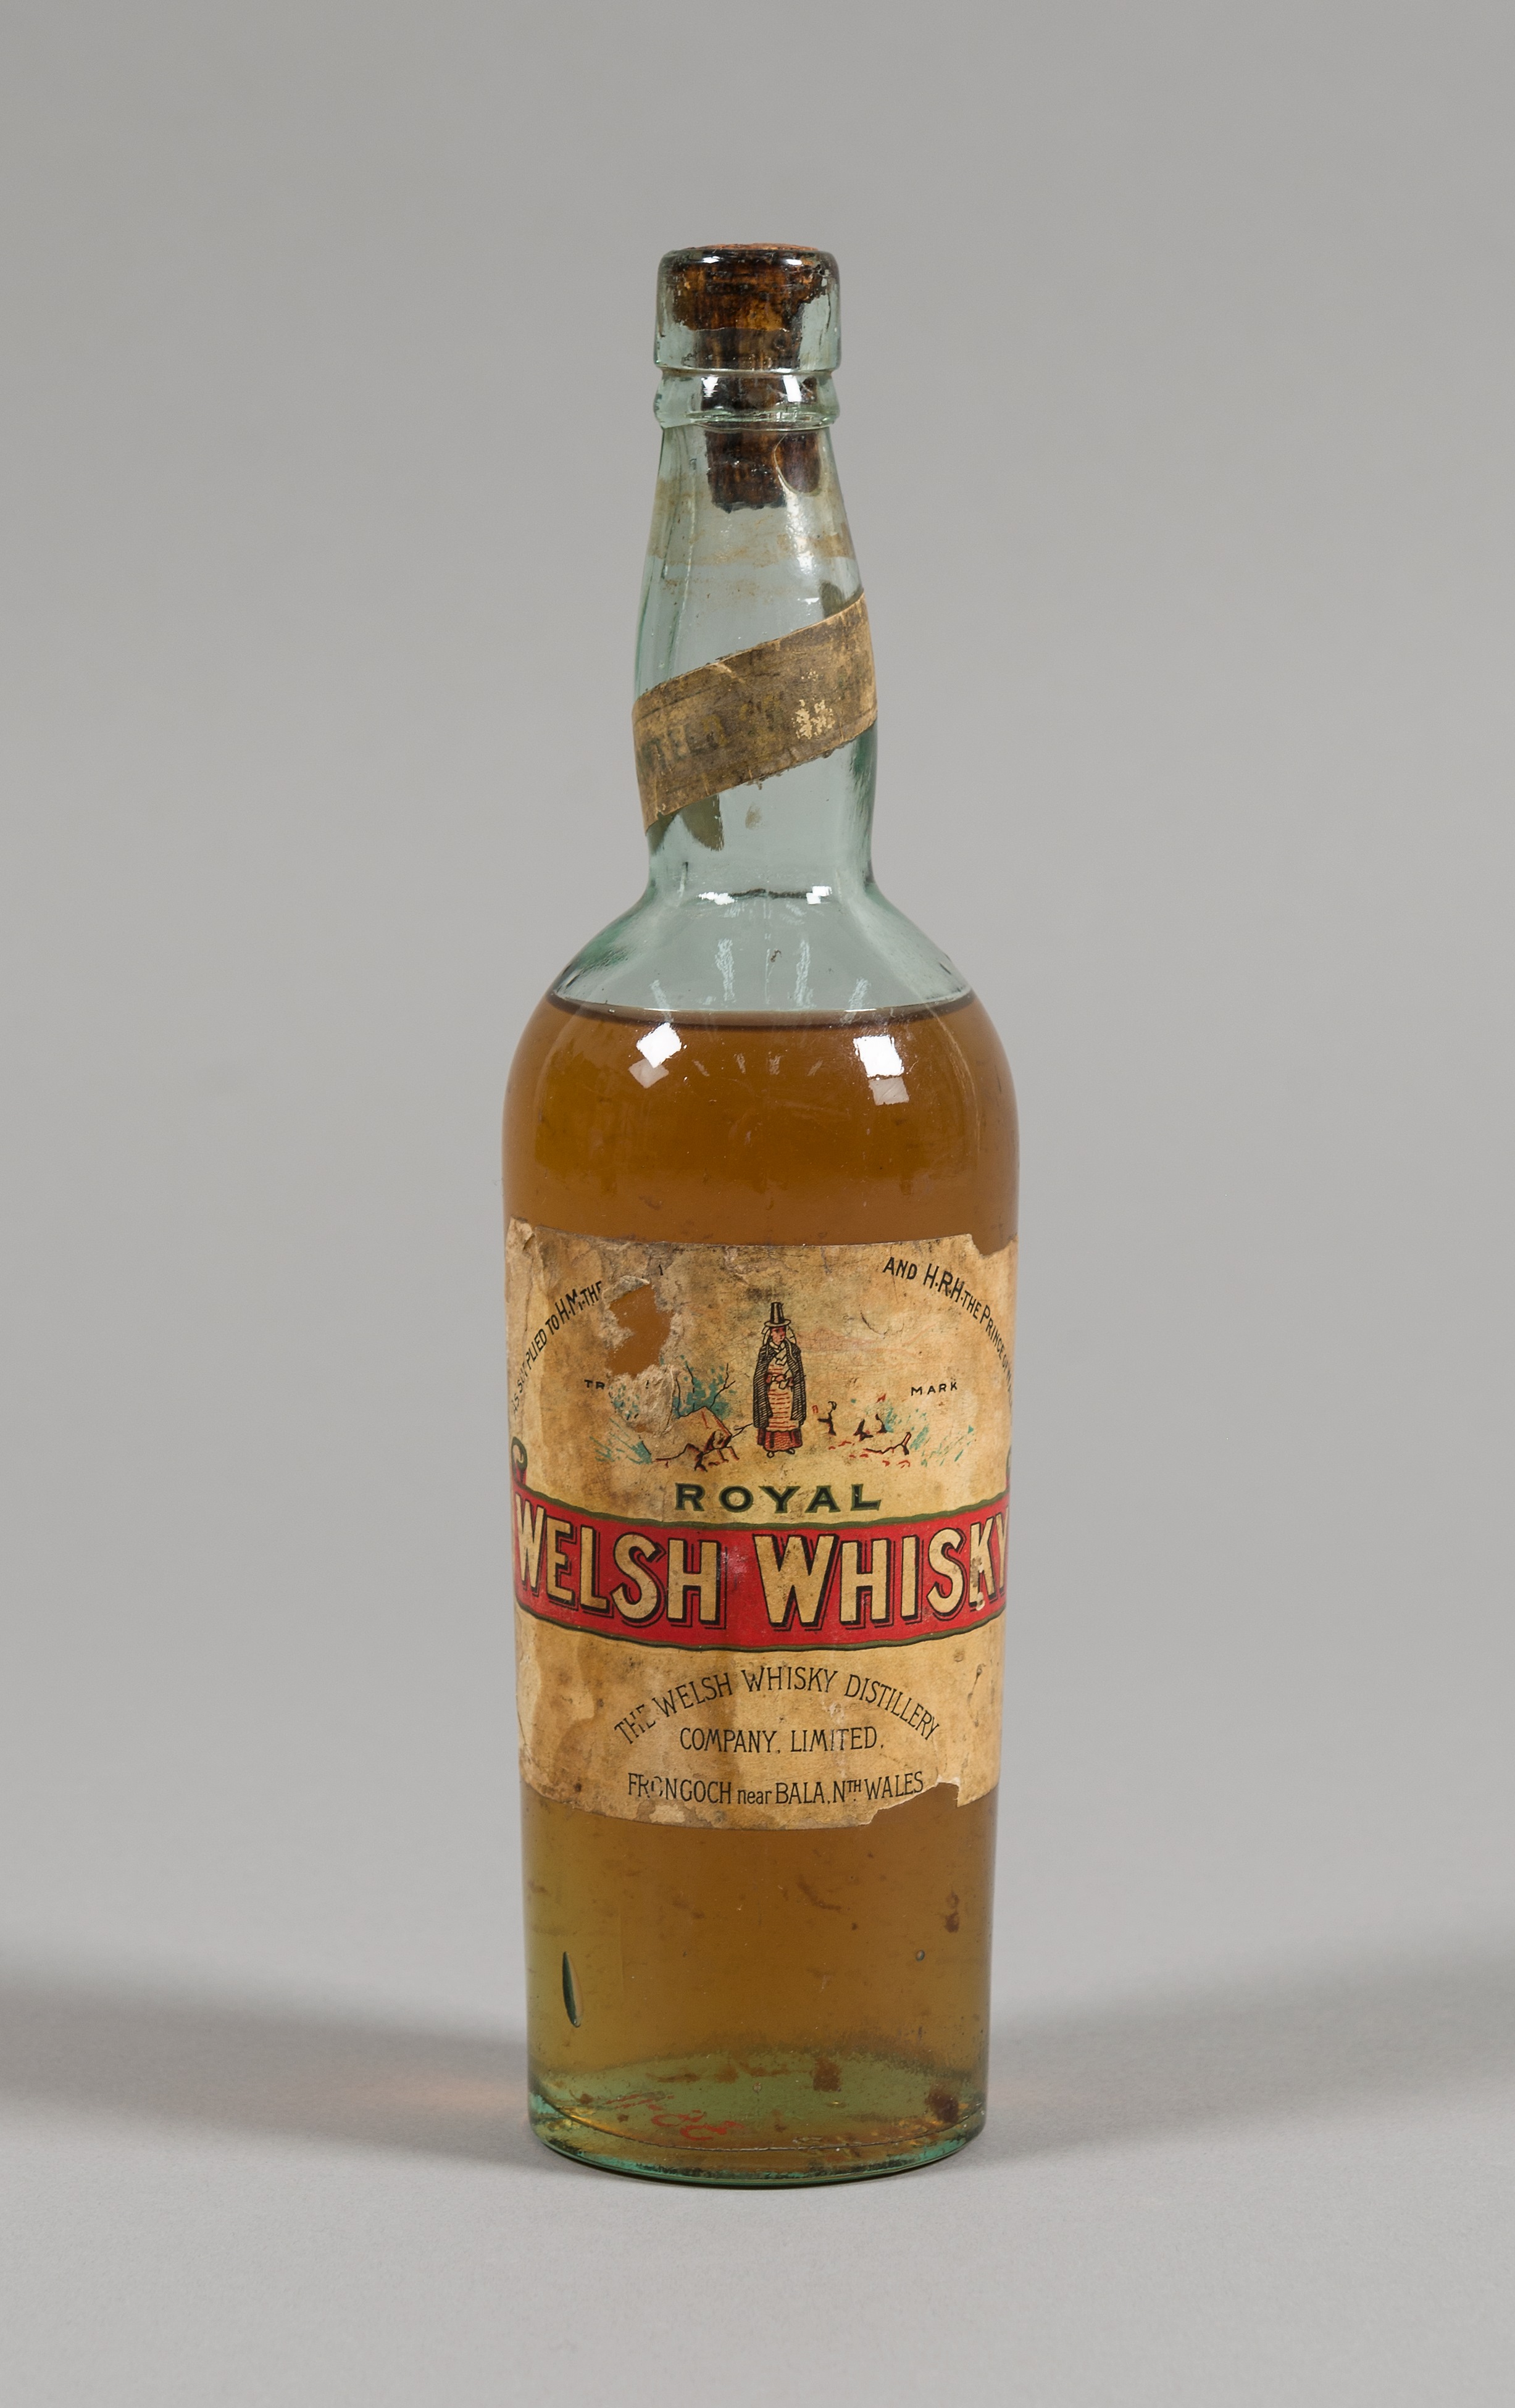 Royal Welsh whisky bottle